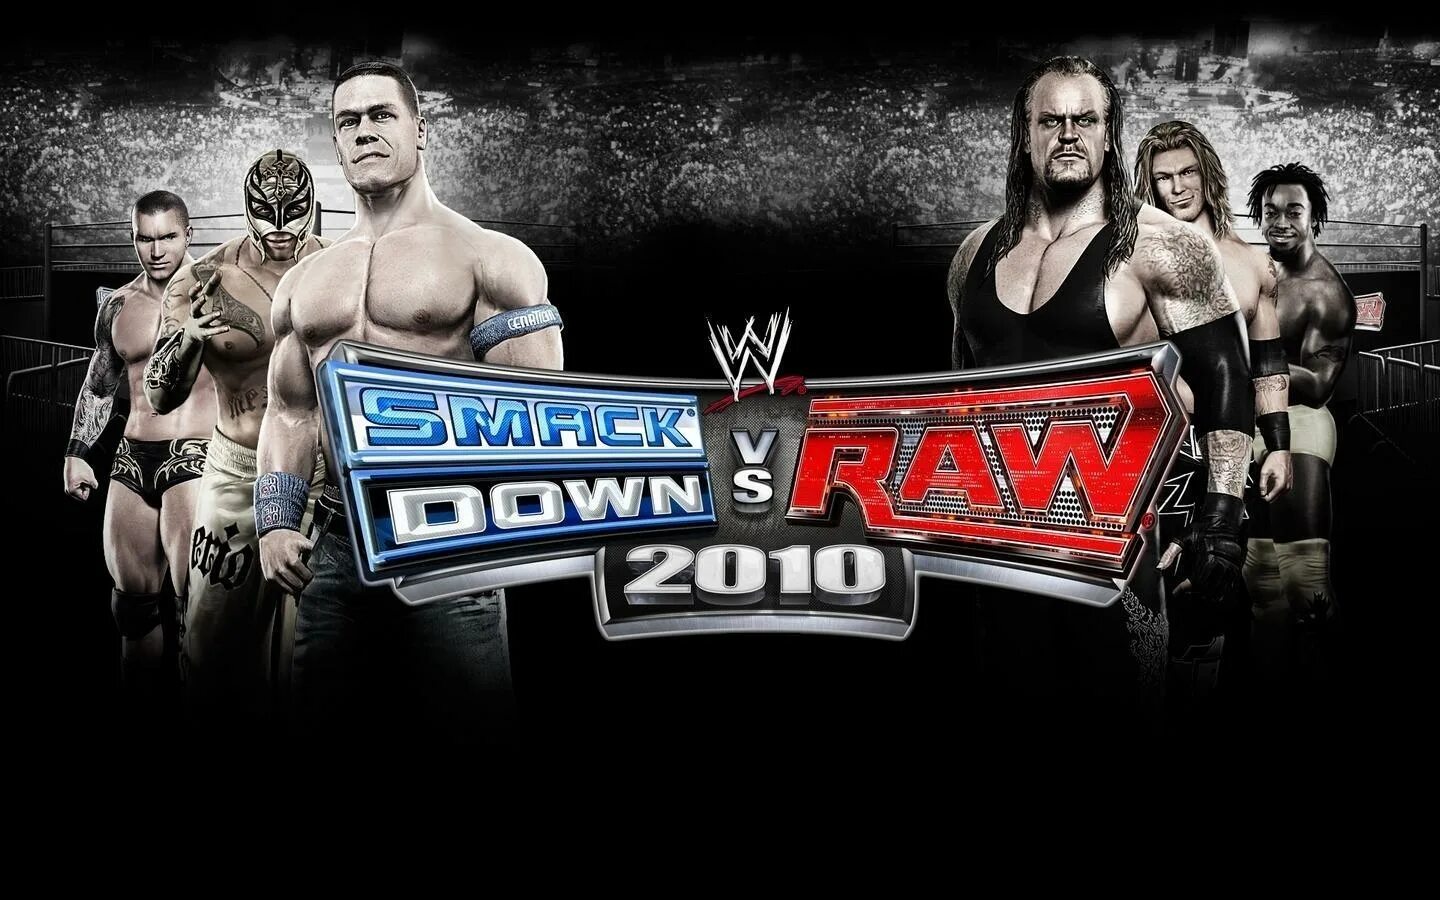 ВВЕ 2010. WWE SVR 2010. WWE SMACKDOWN. WWE SMACKDOWN 2010. Smack down